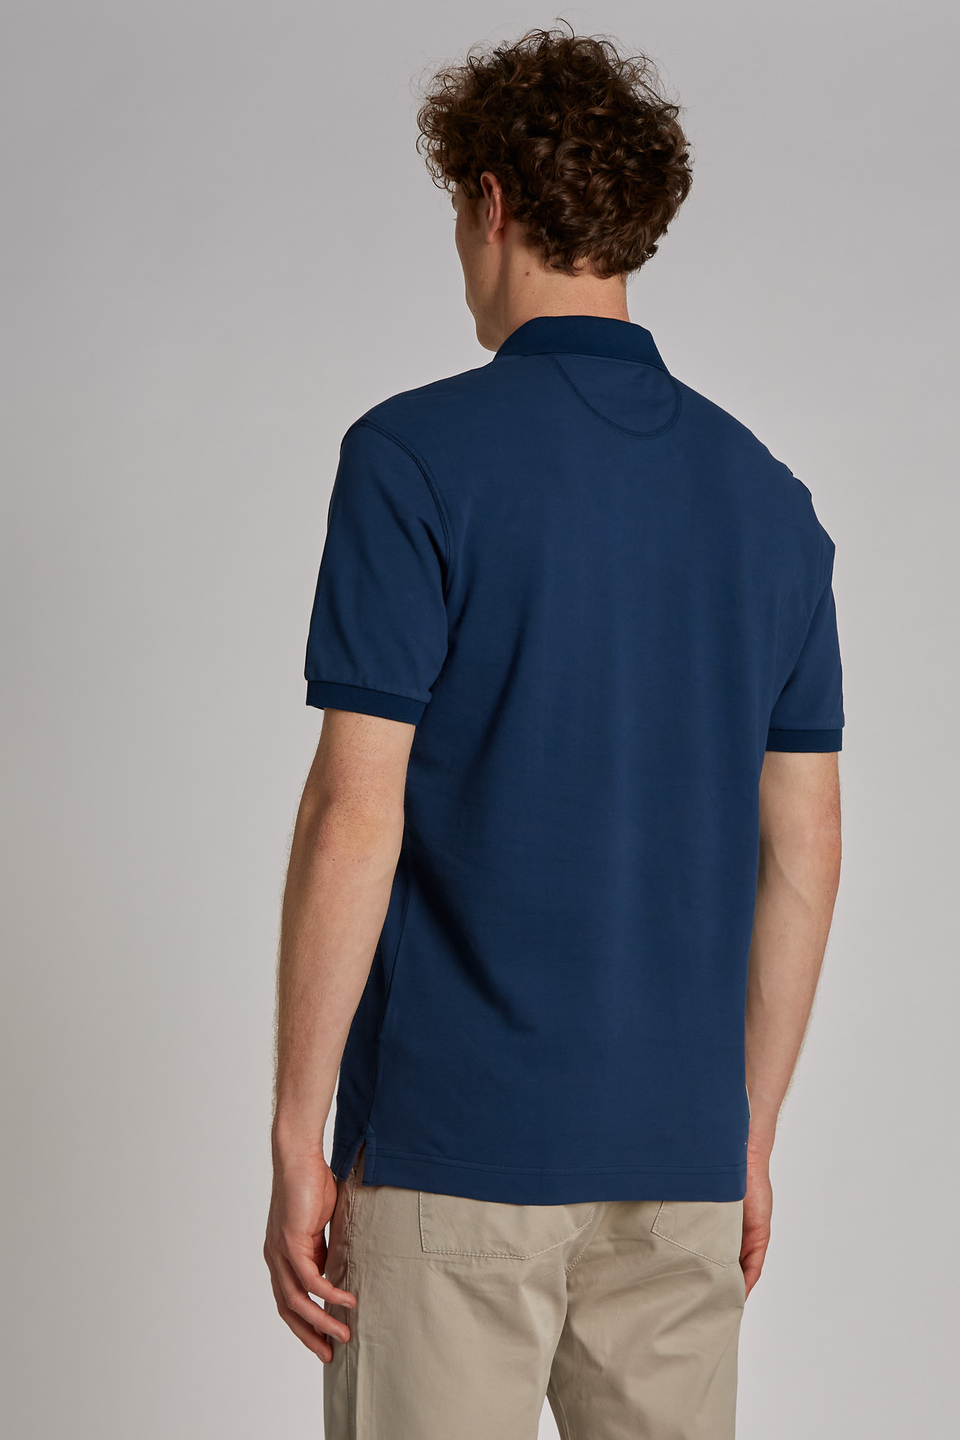 Men's short-sleeved regular-fit stretch cotton polo shirt - La Martina - Official Online Shop